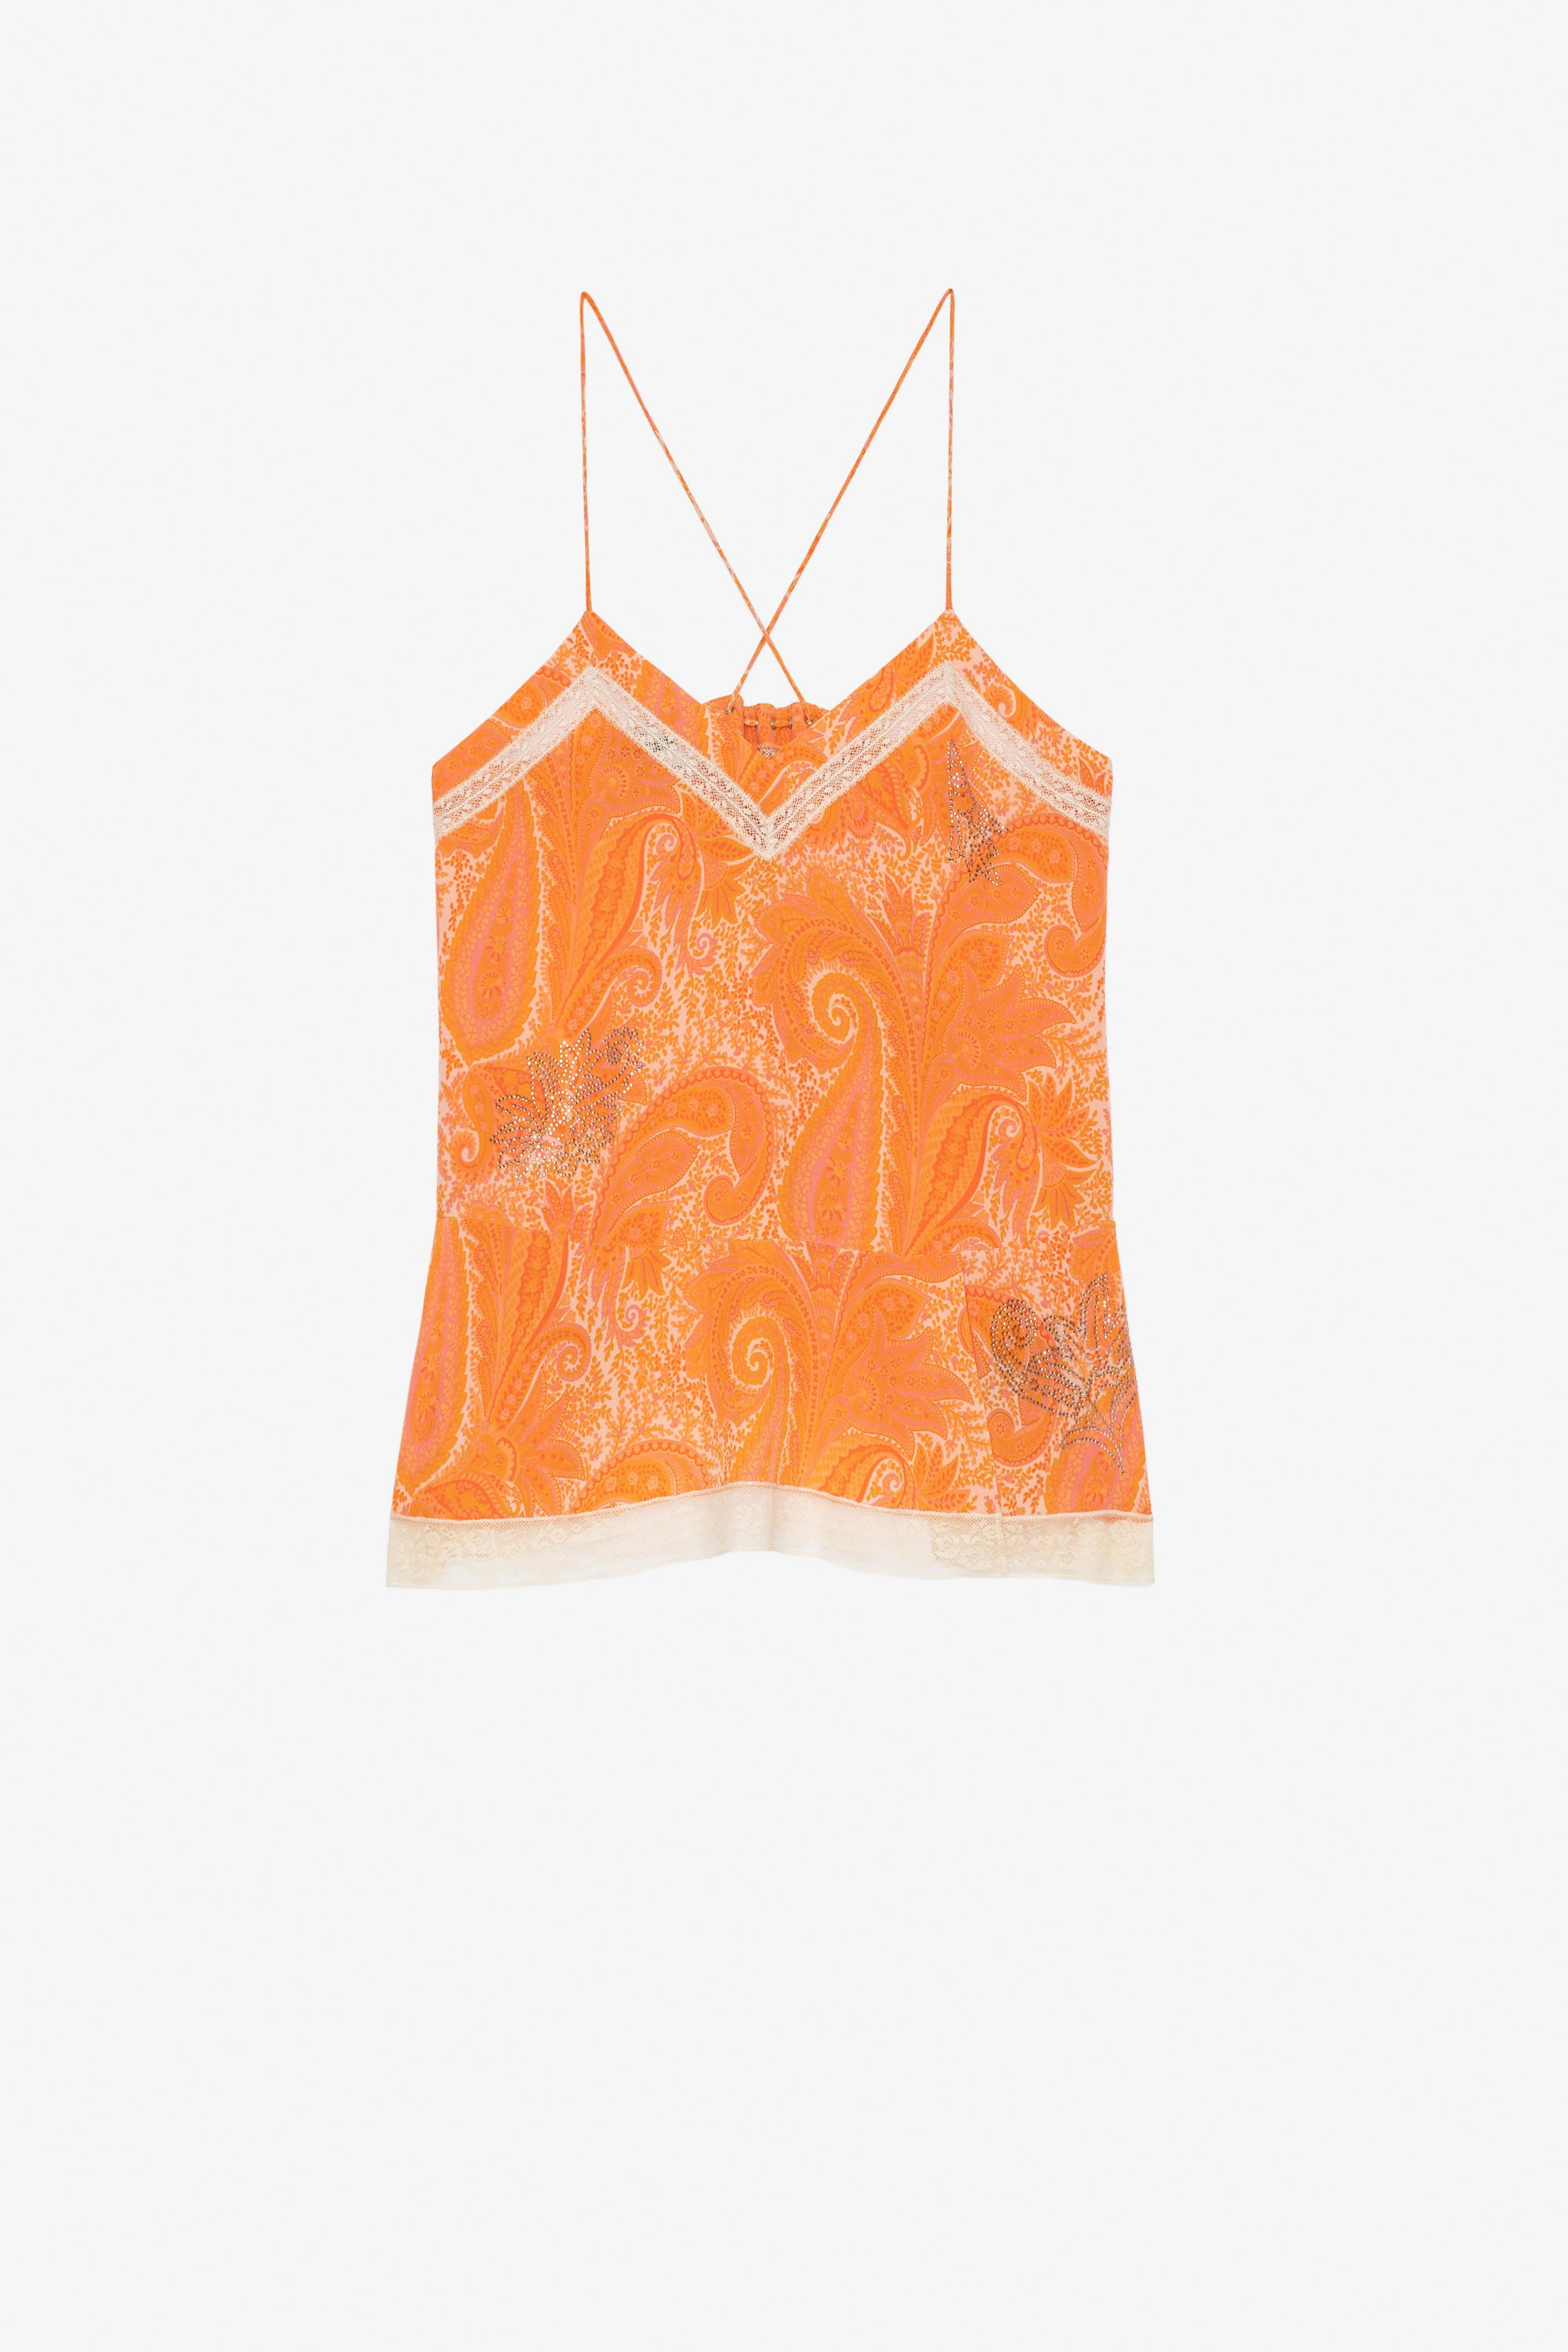 Carly Silk Camisole Women's orange paisley print silk camisole